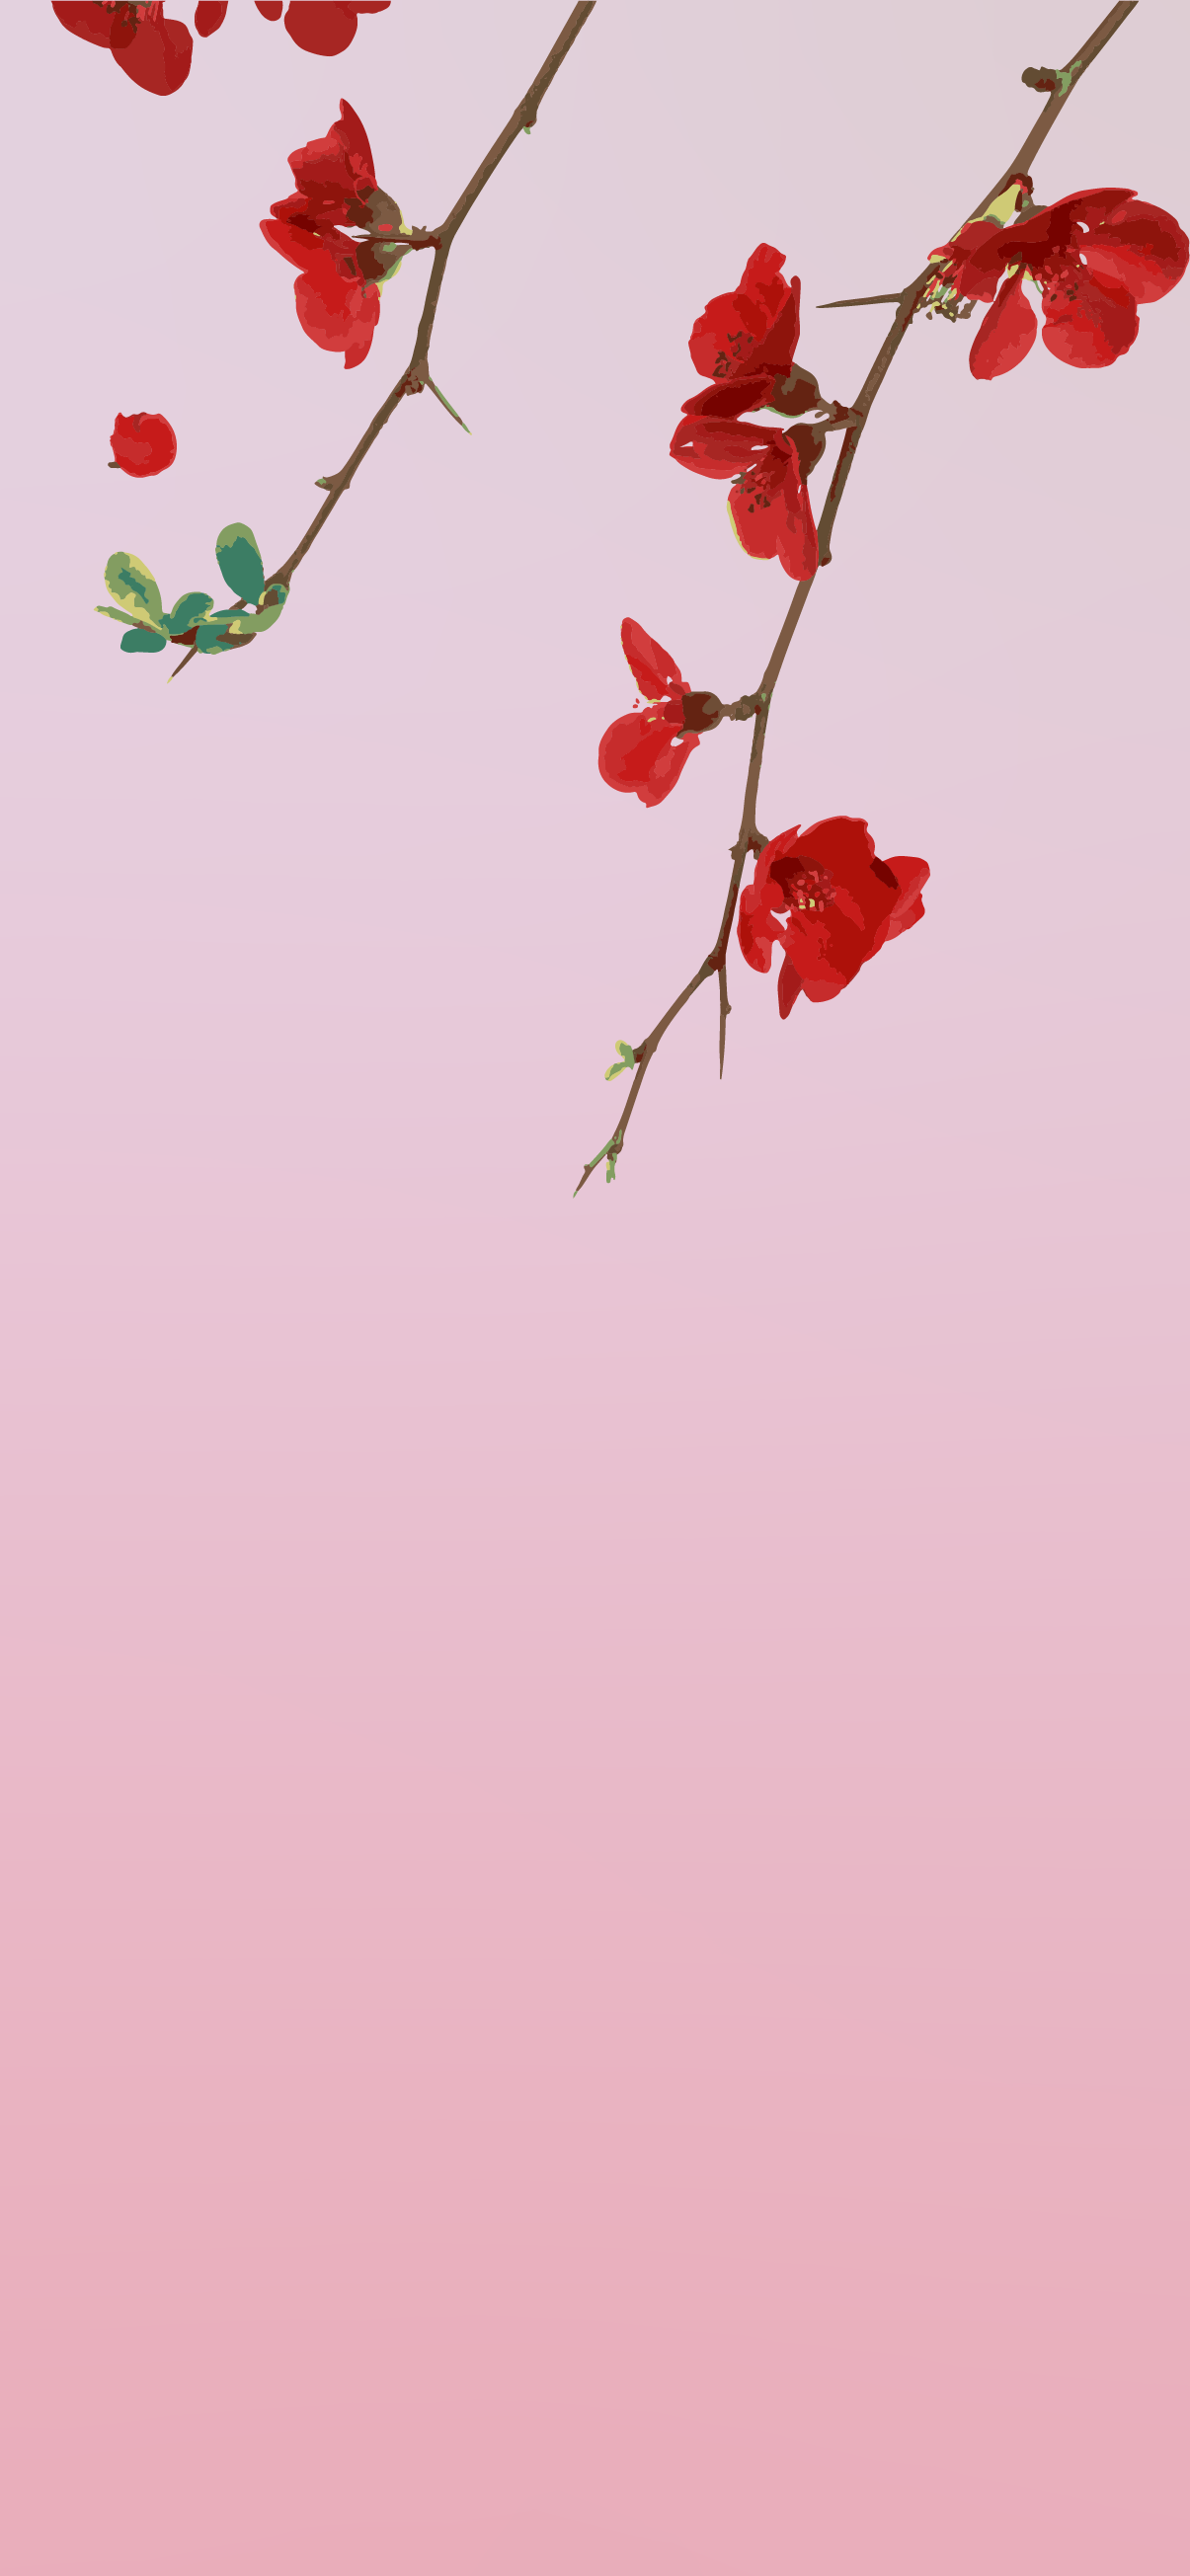 aesthetic flowers iphone wallpaper 4k